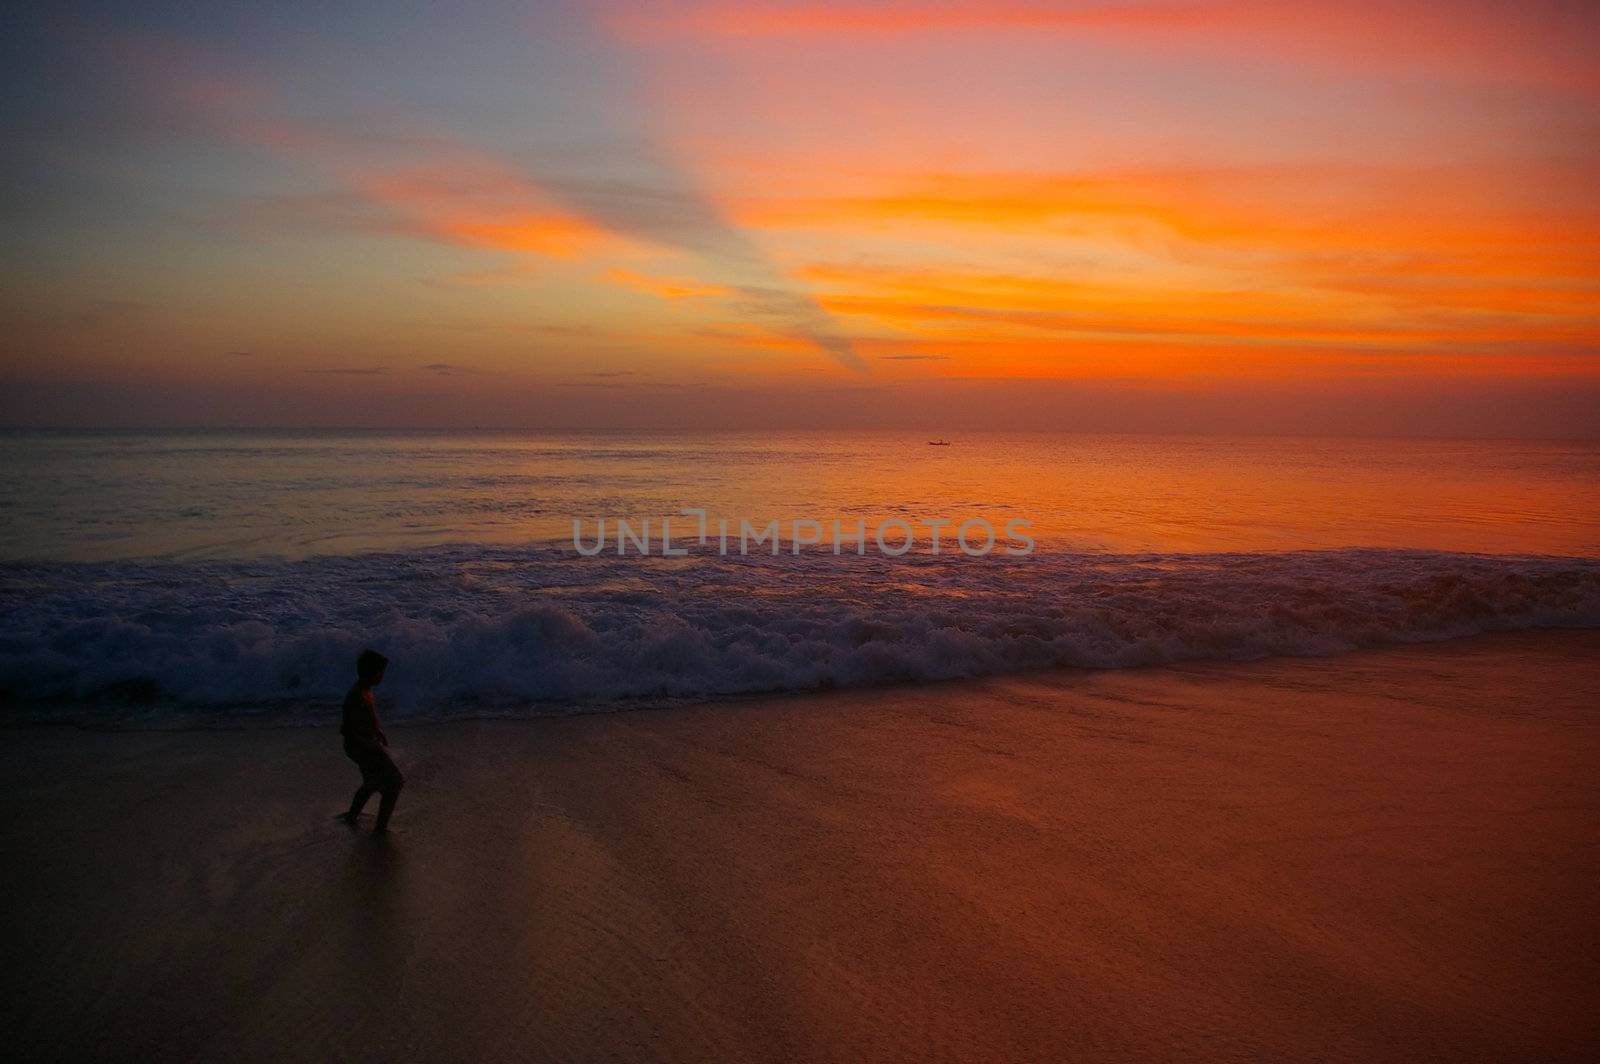 Boy on a beach at sunset by Komar